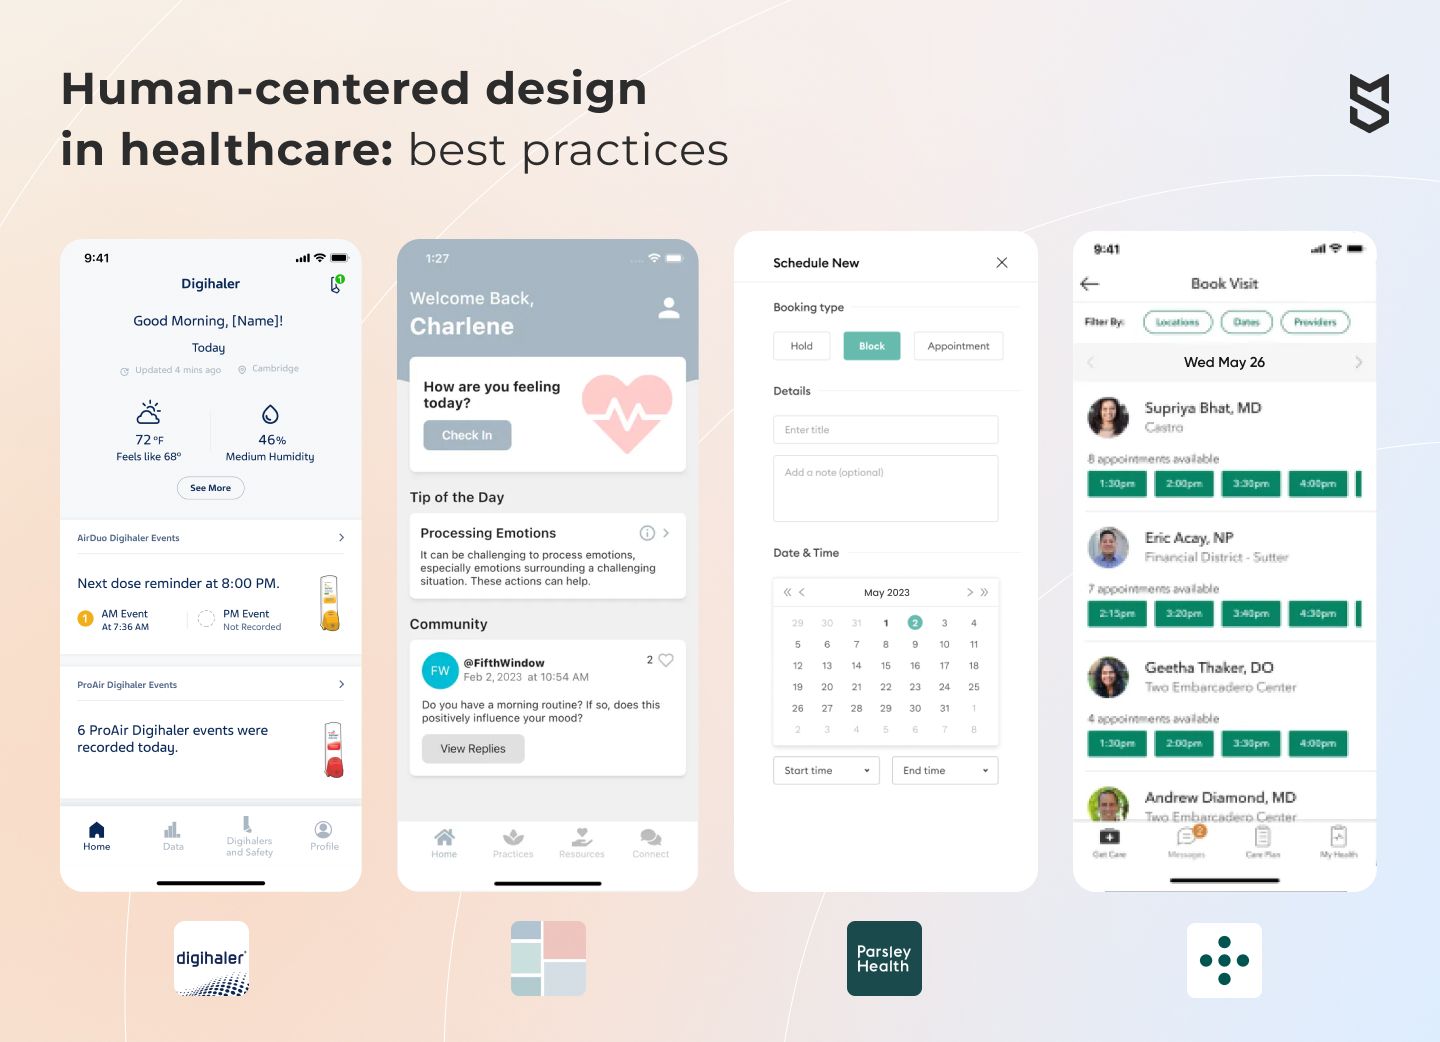 Human-centered design in healthcare: best practices